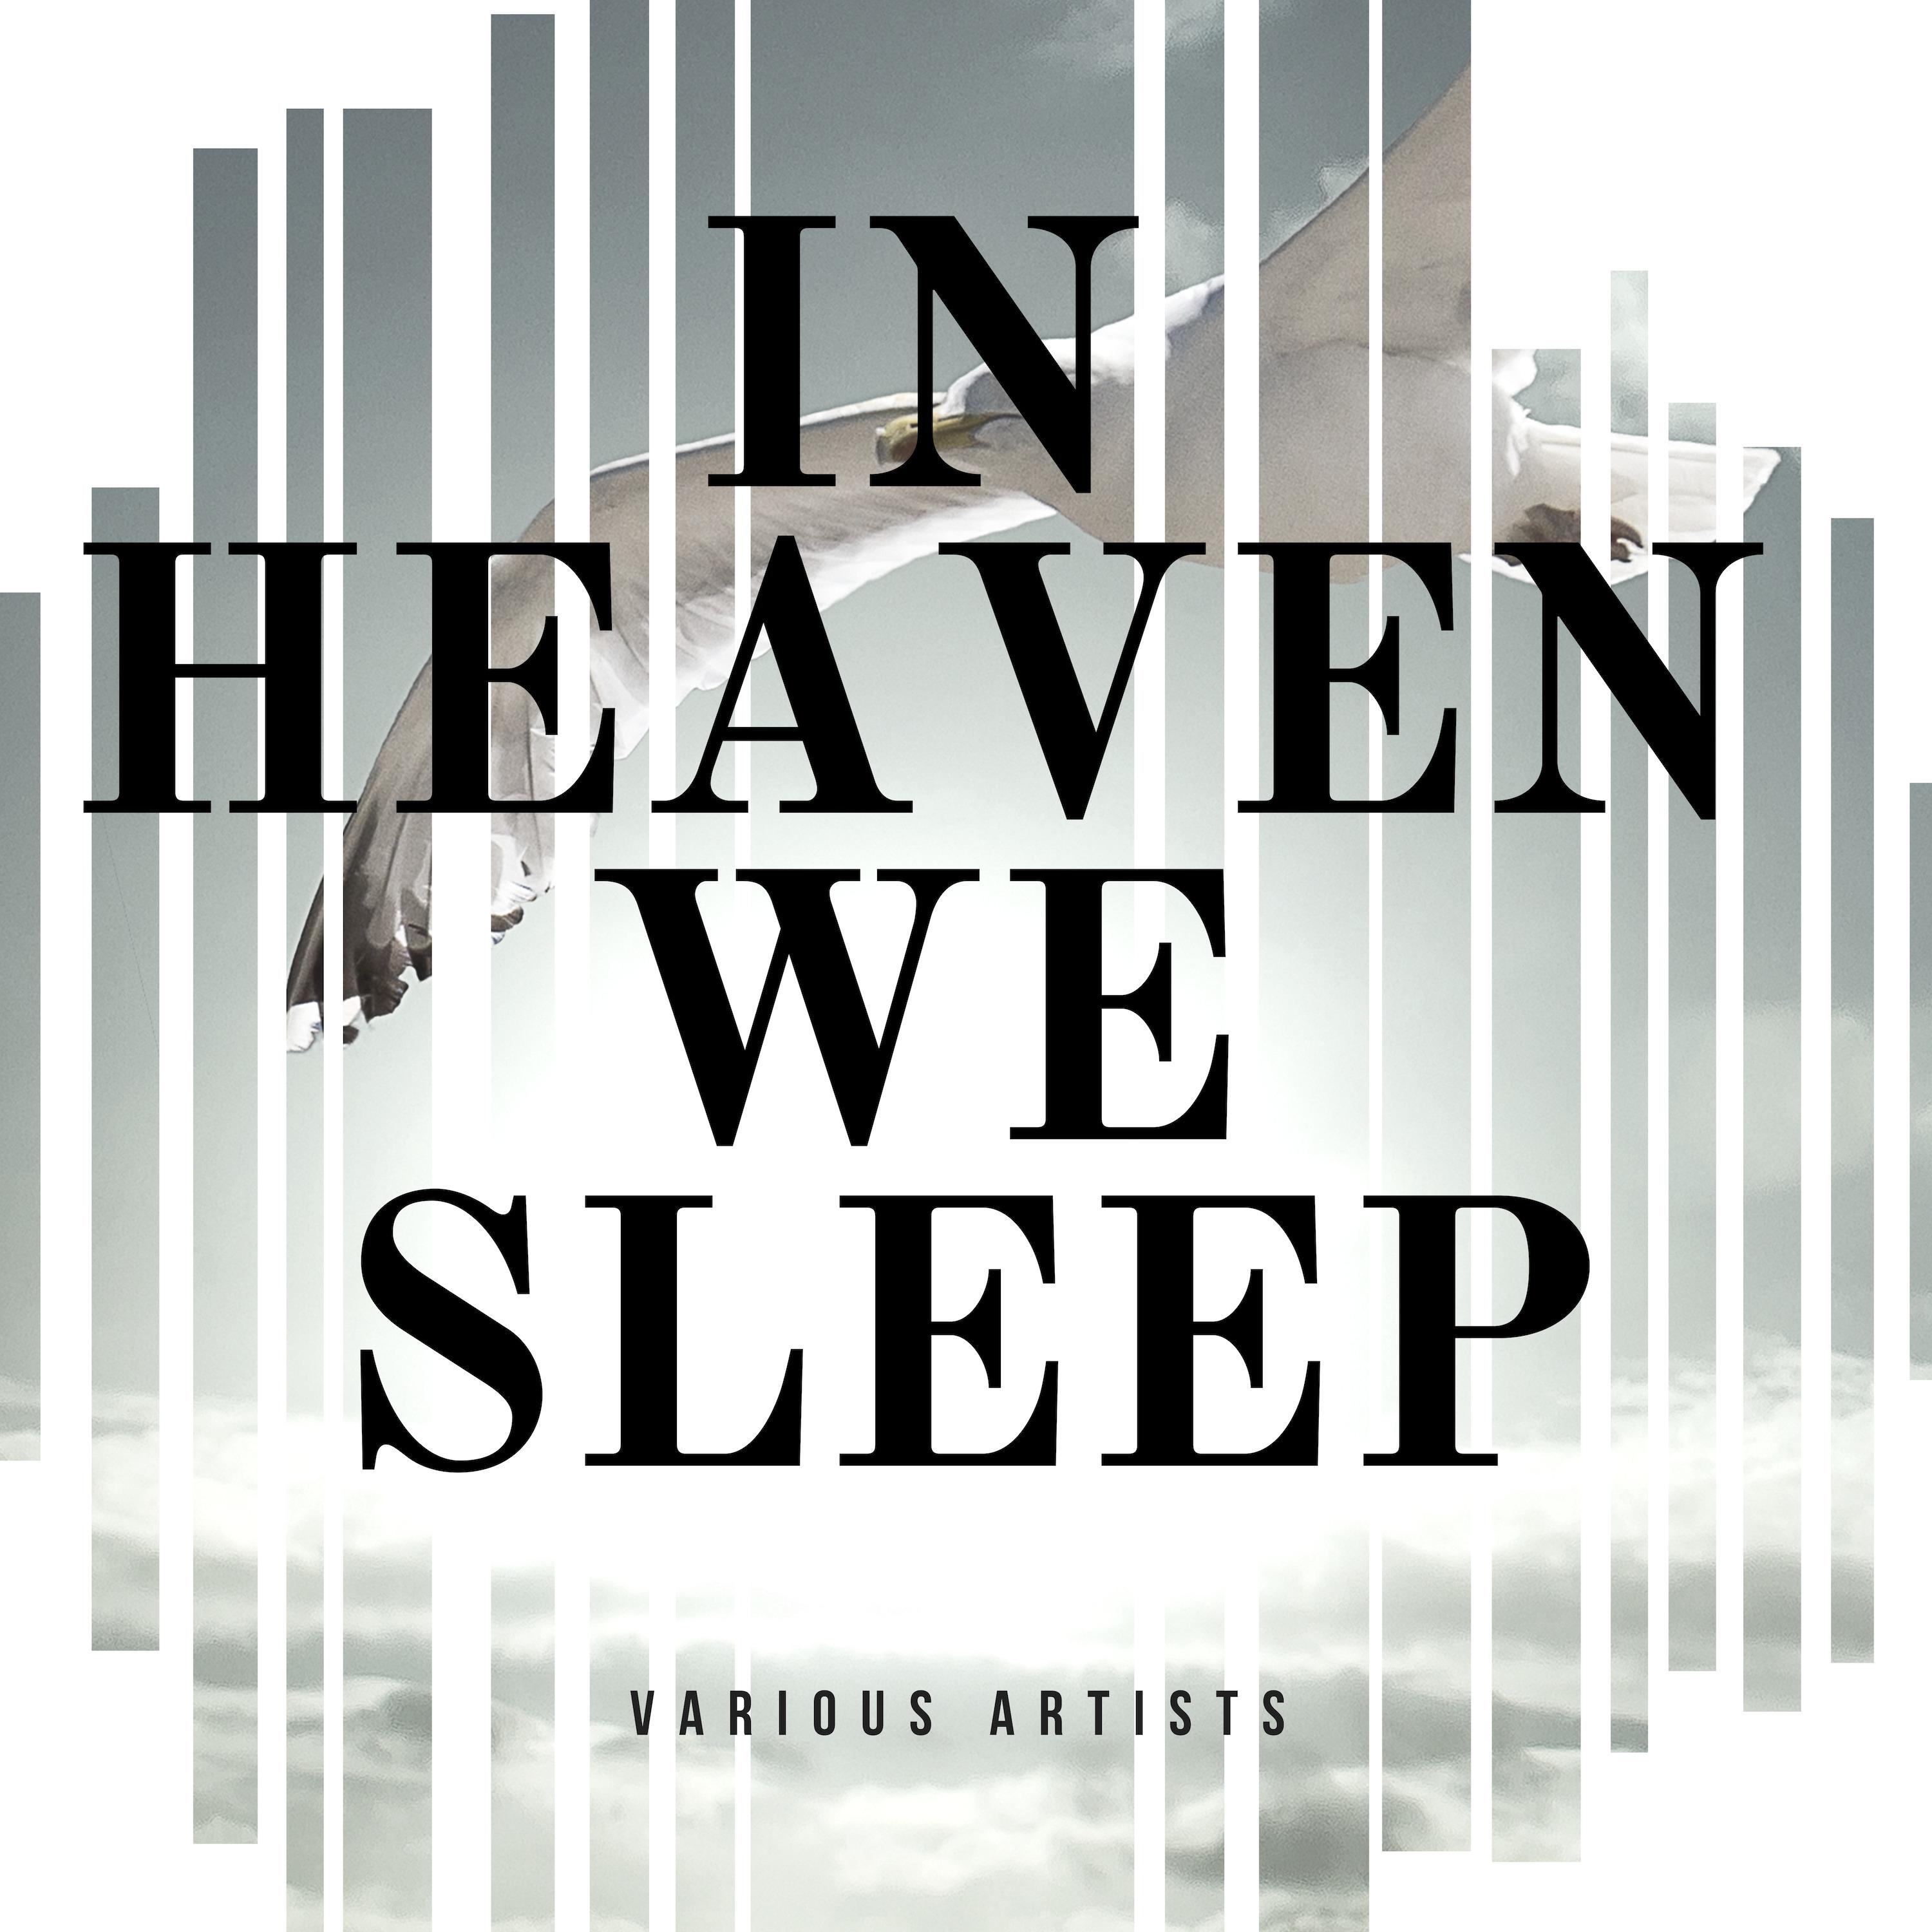 In Heaven We Sleep